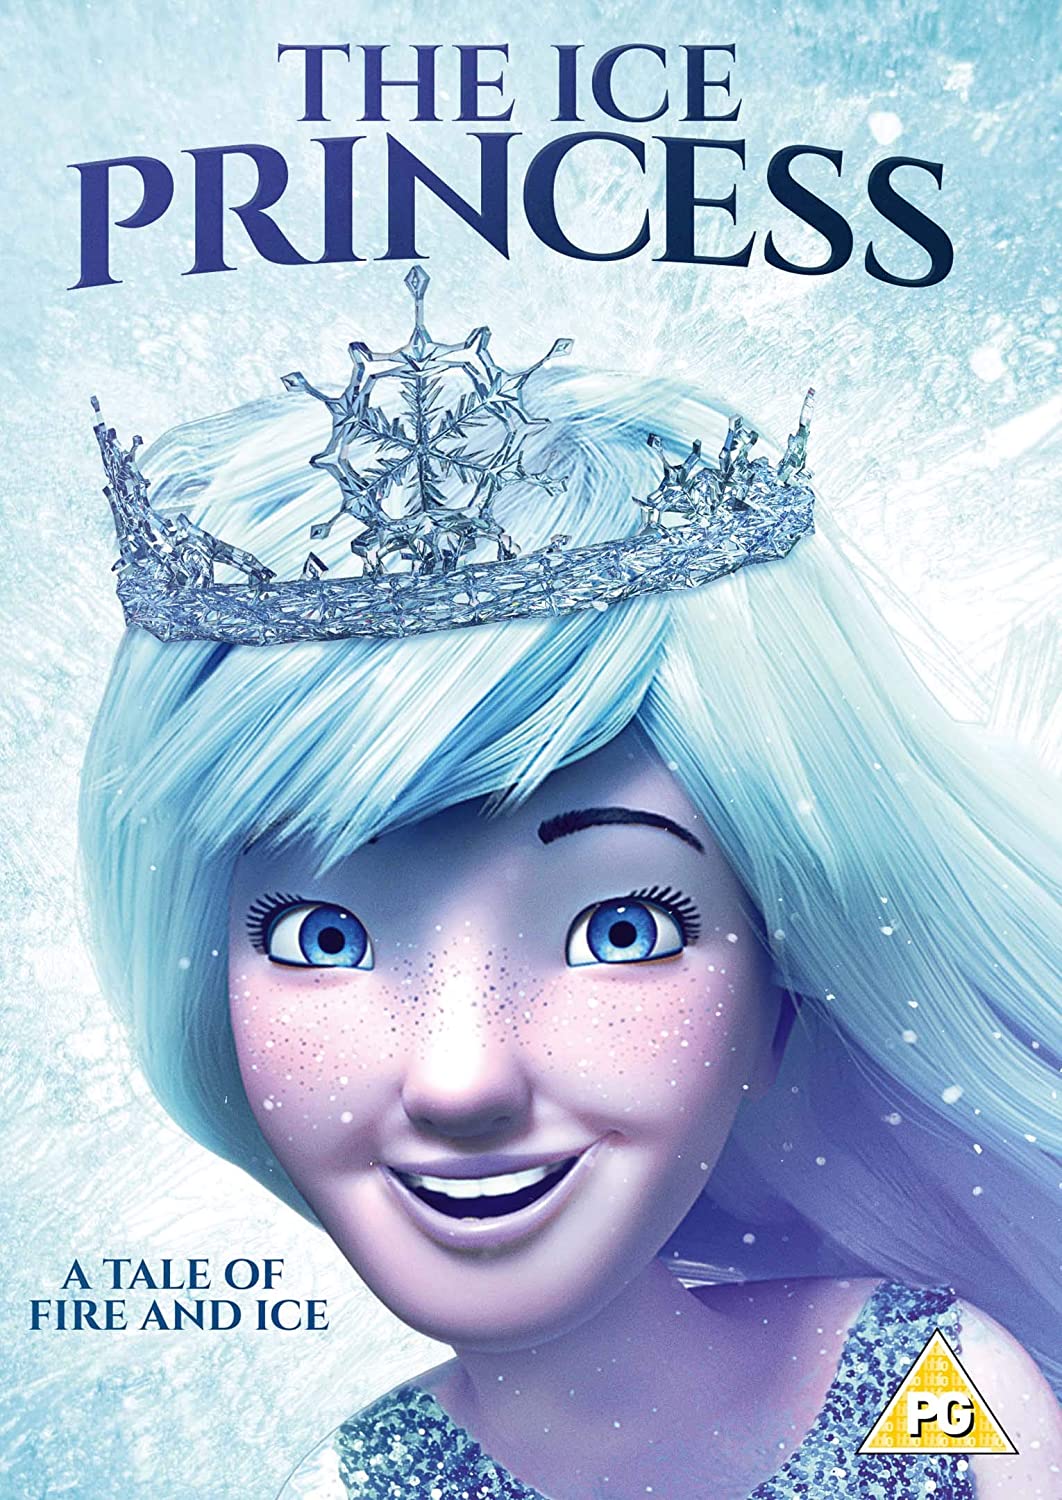 The Ice Princess - Family/Sport [DVD]